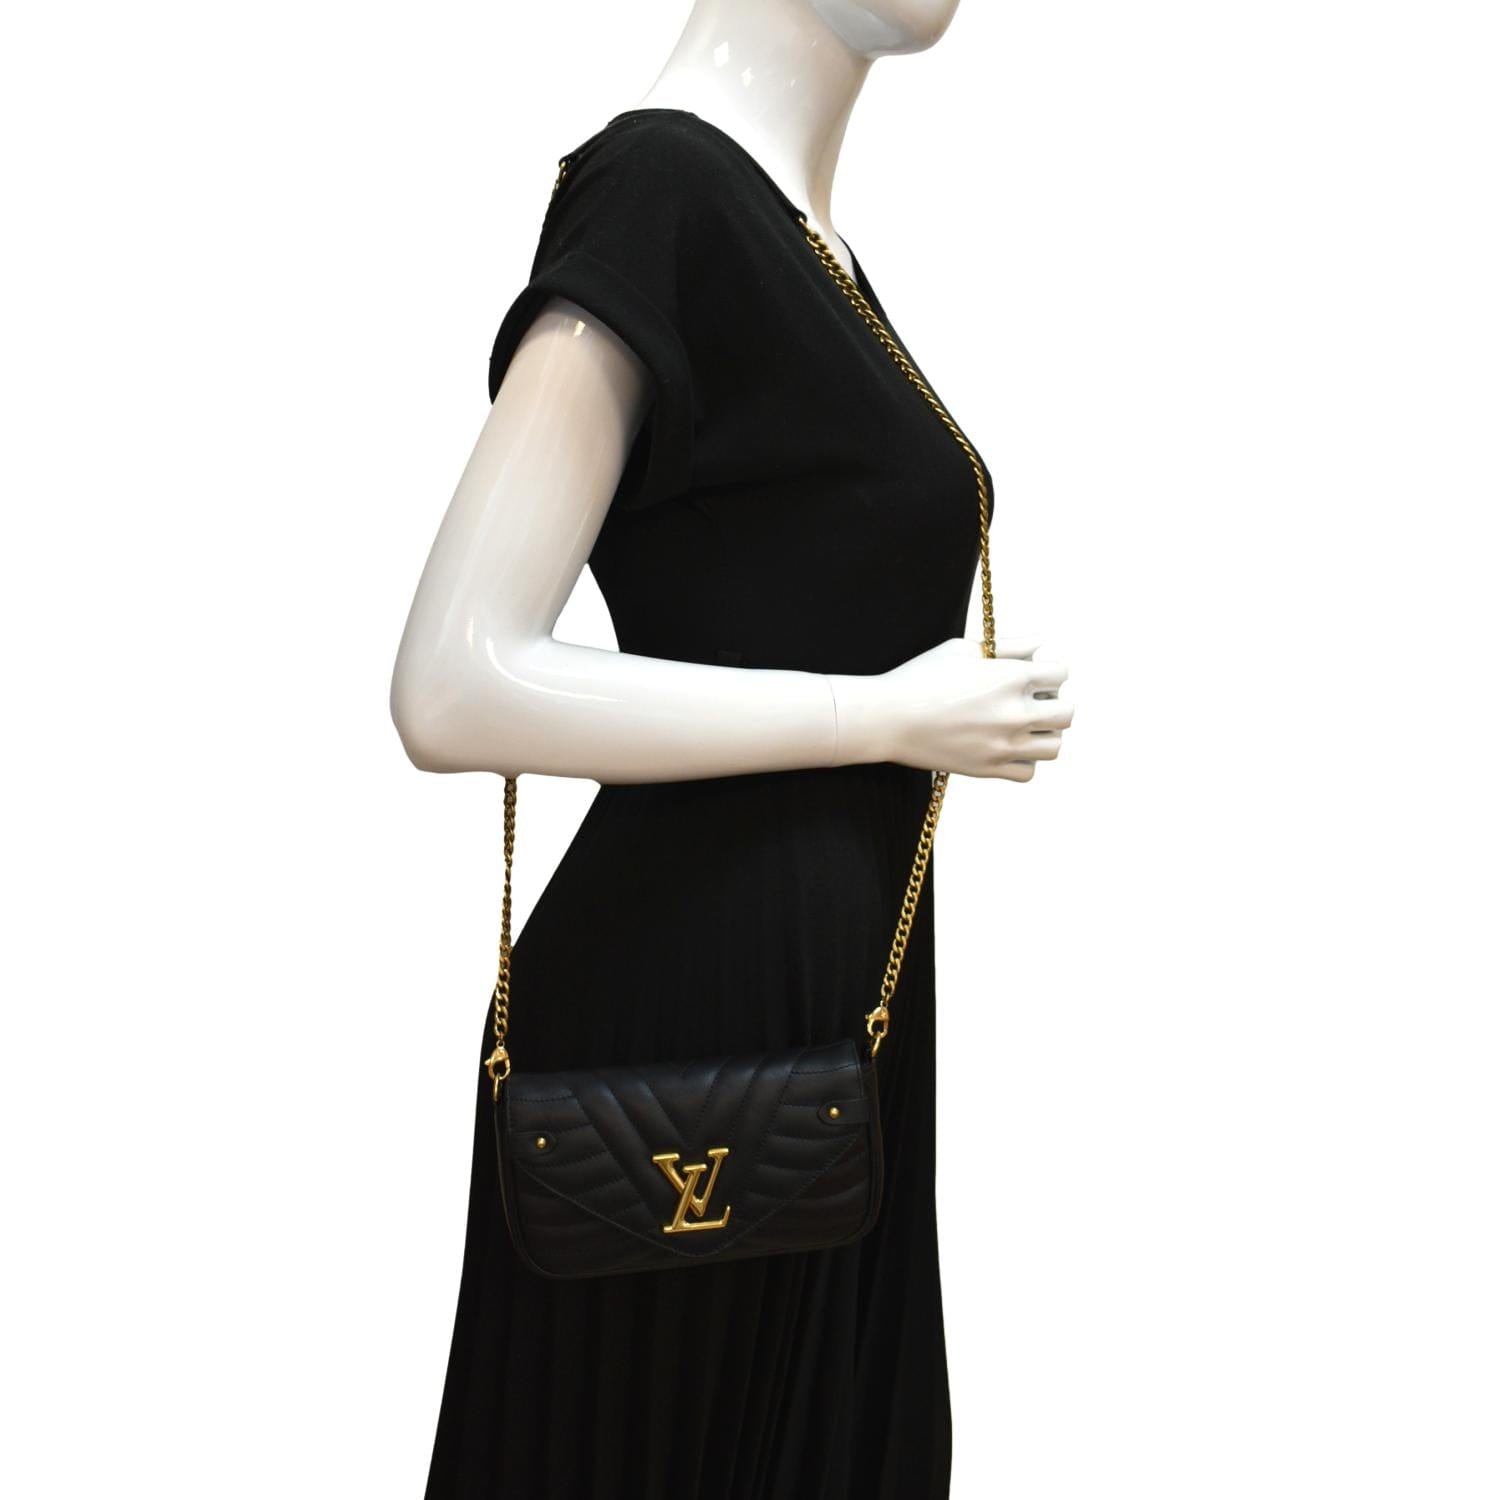 Louis Vuitton Black New Wave Chain Bag